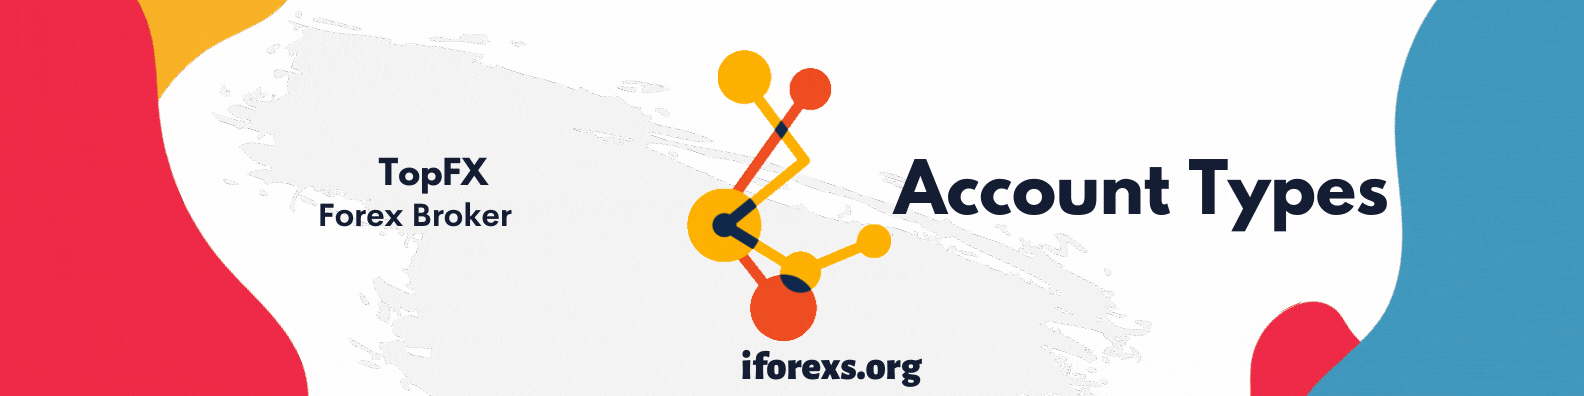 TopFX Ltd Venue Account Types